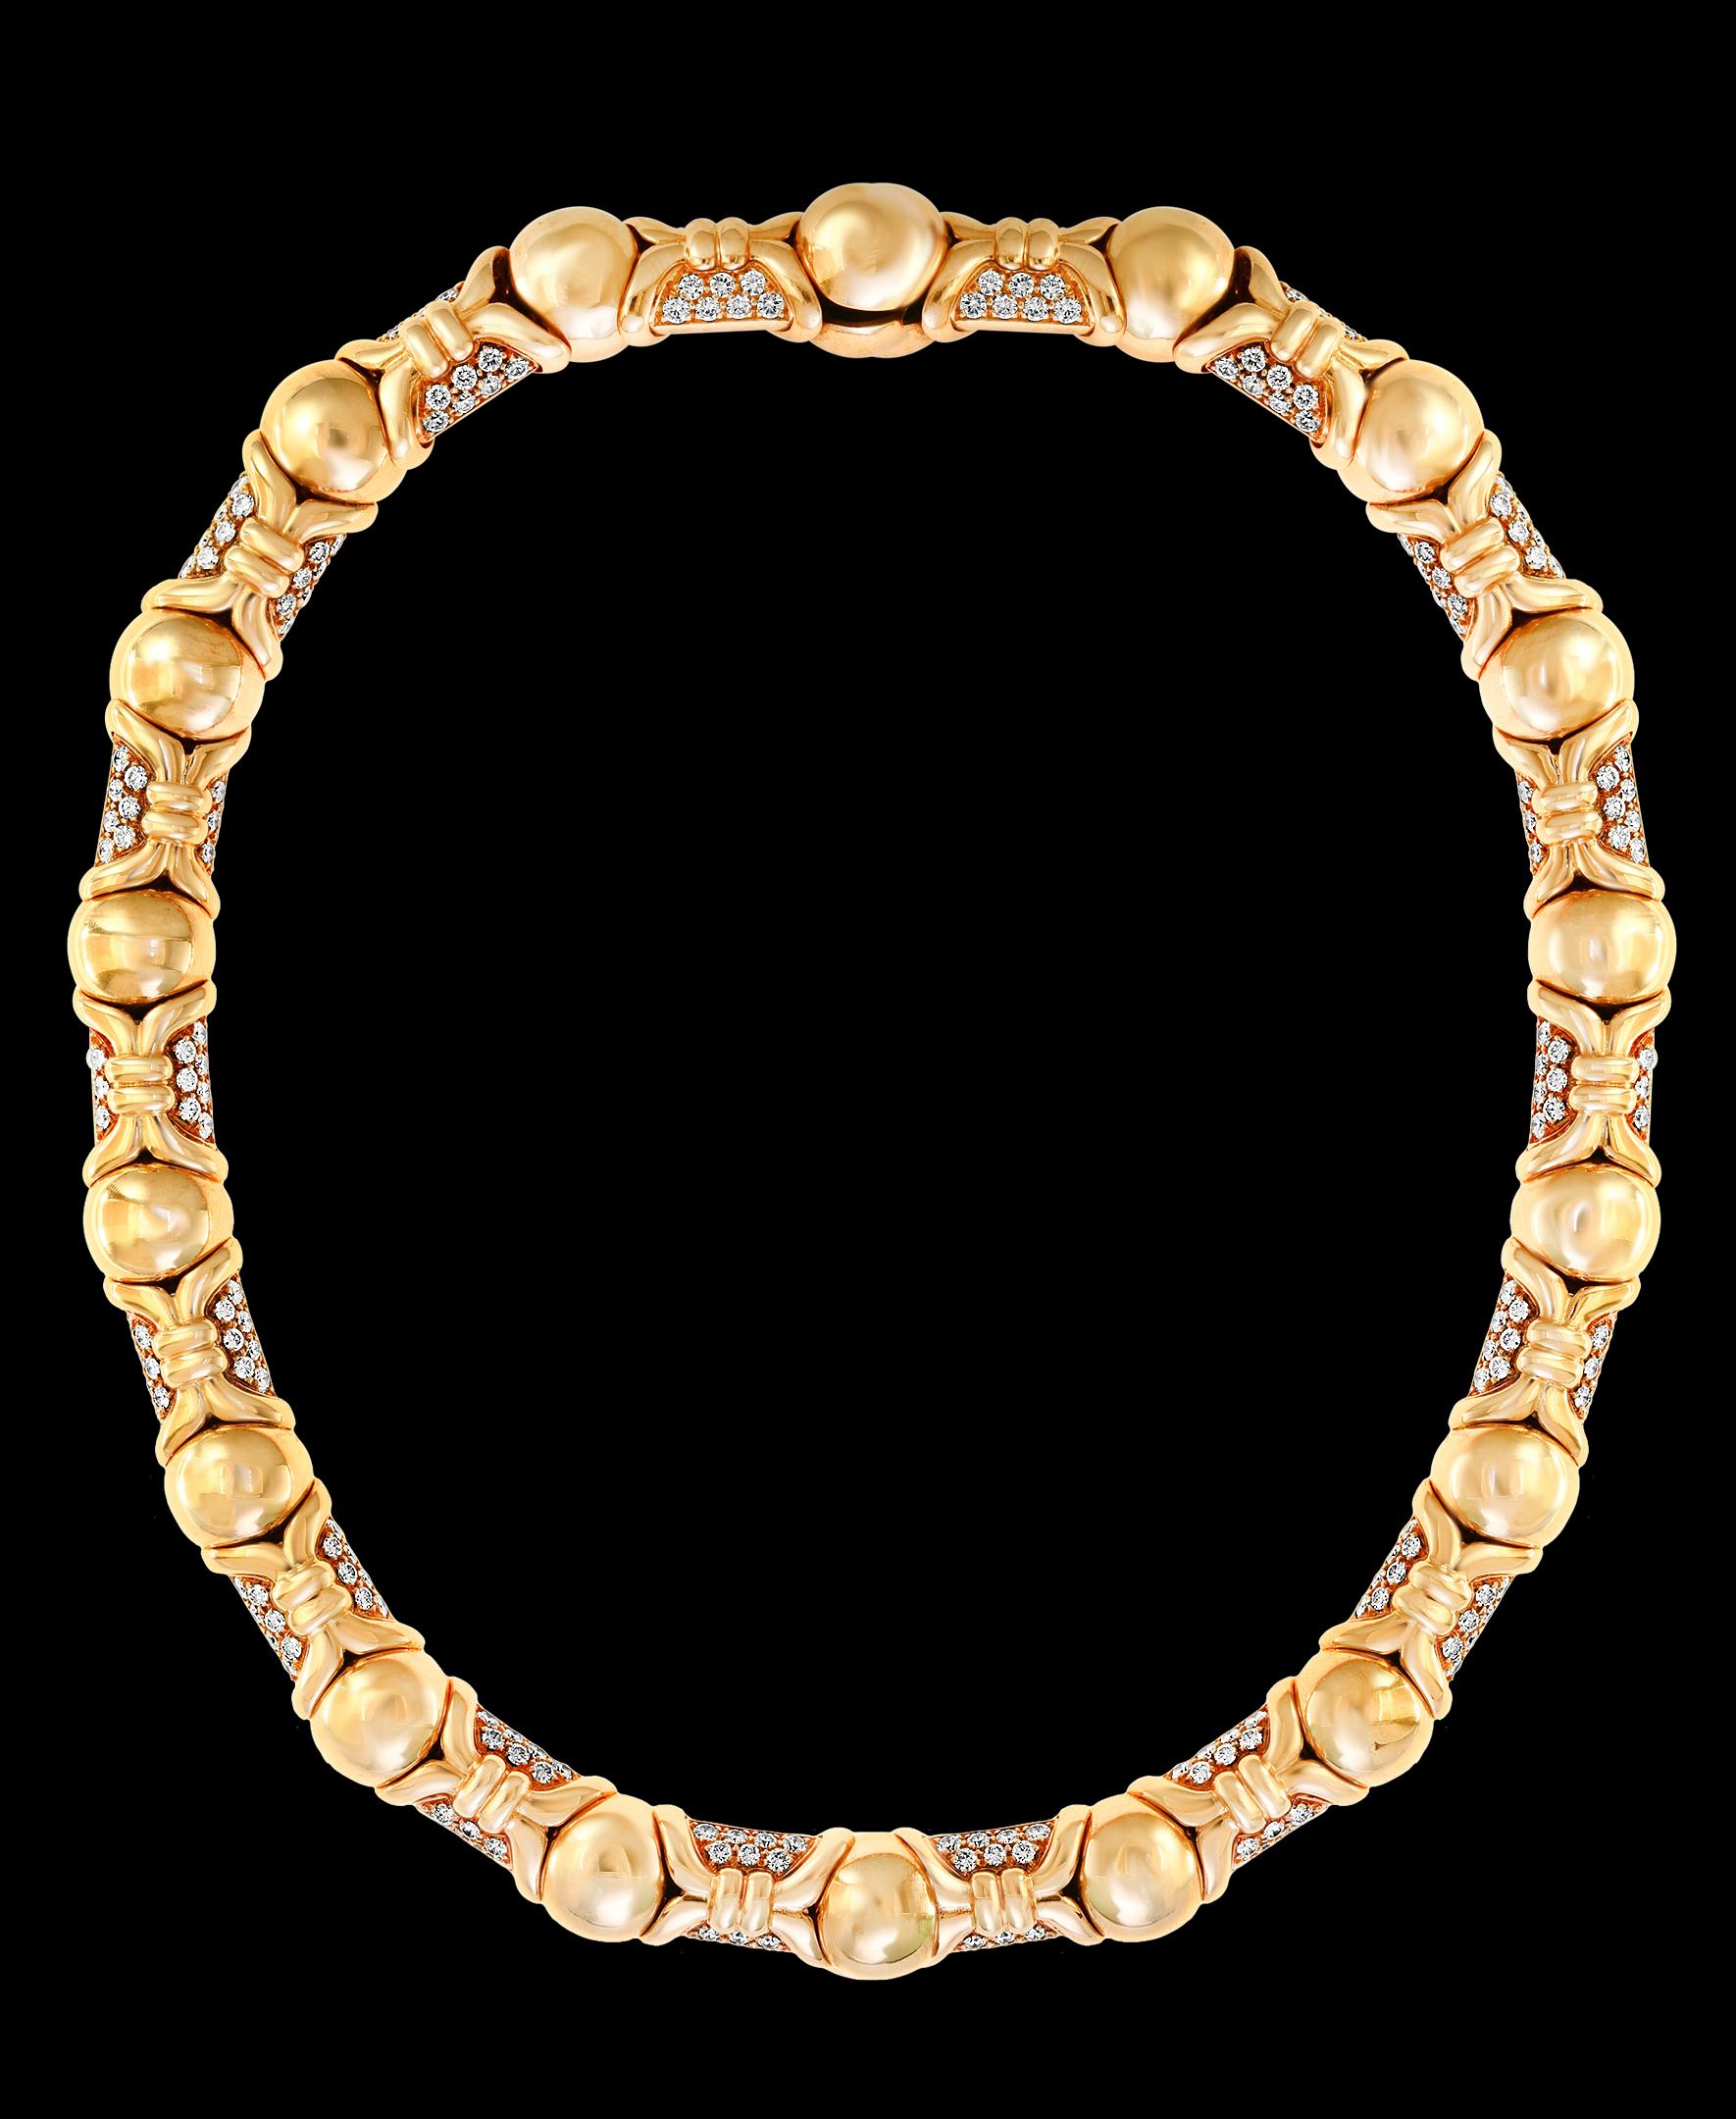 Bulgari Suite Necklace and Earrings in 18 Karat Gold and 12 Carat Diamonds 2